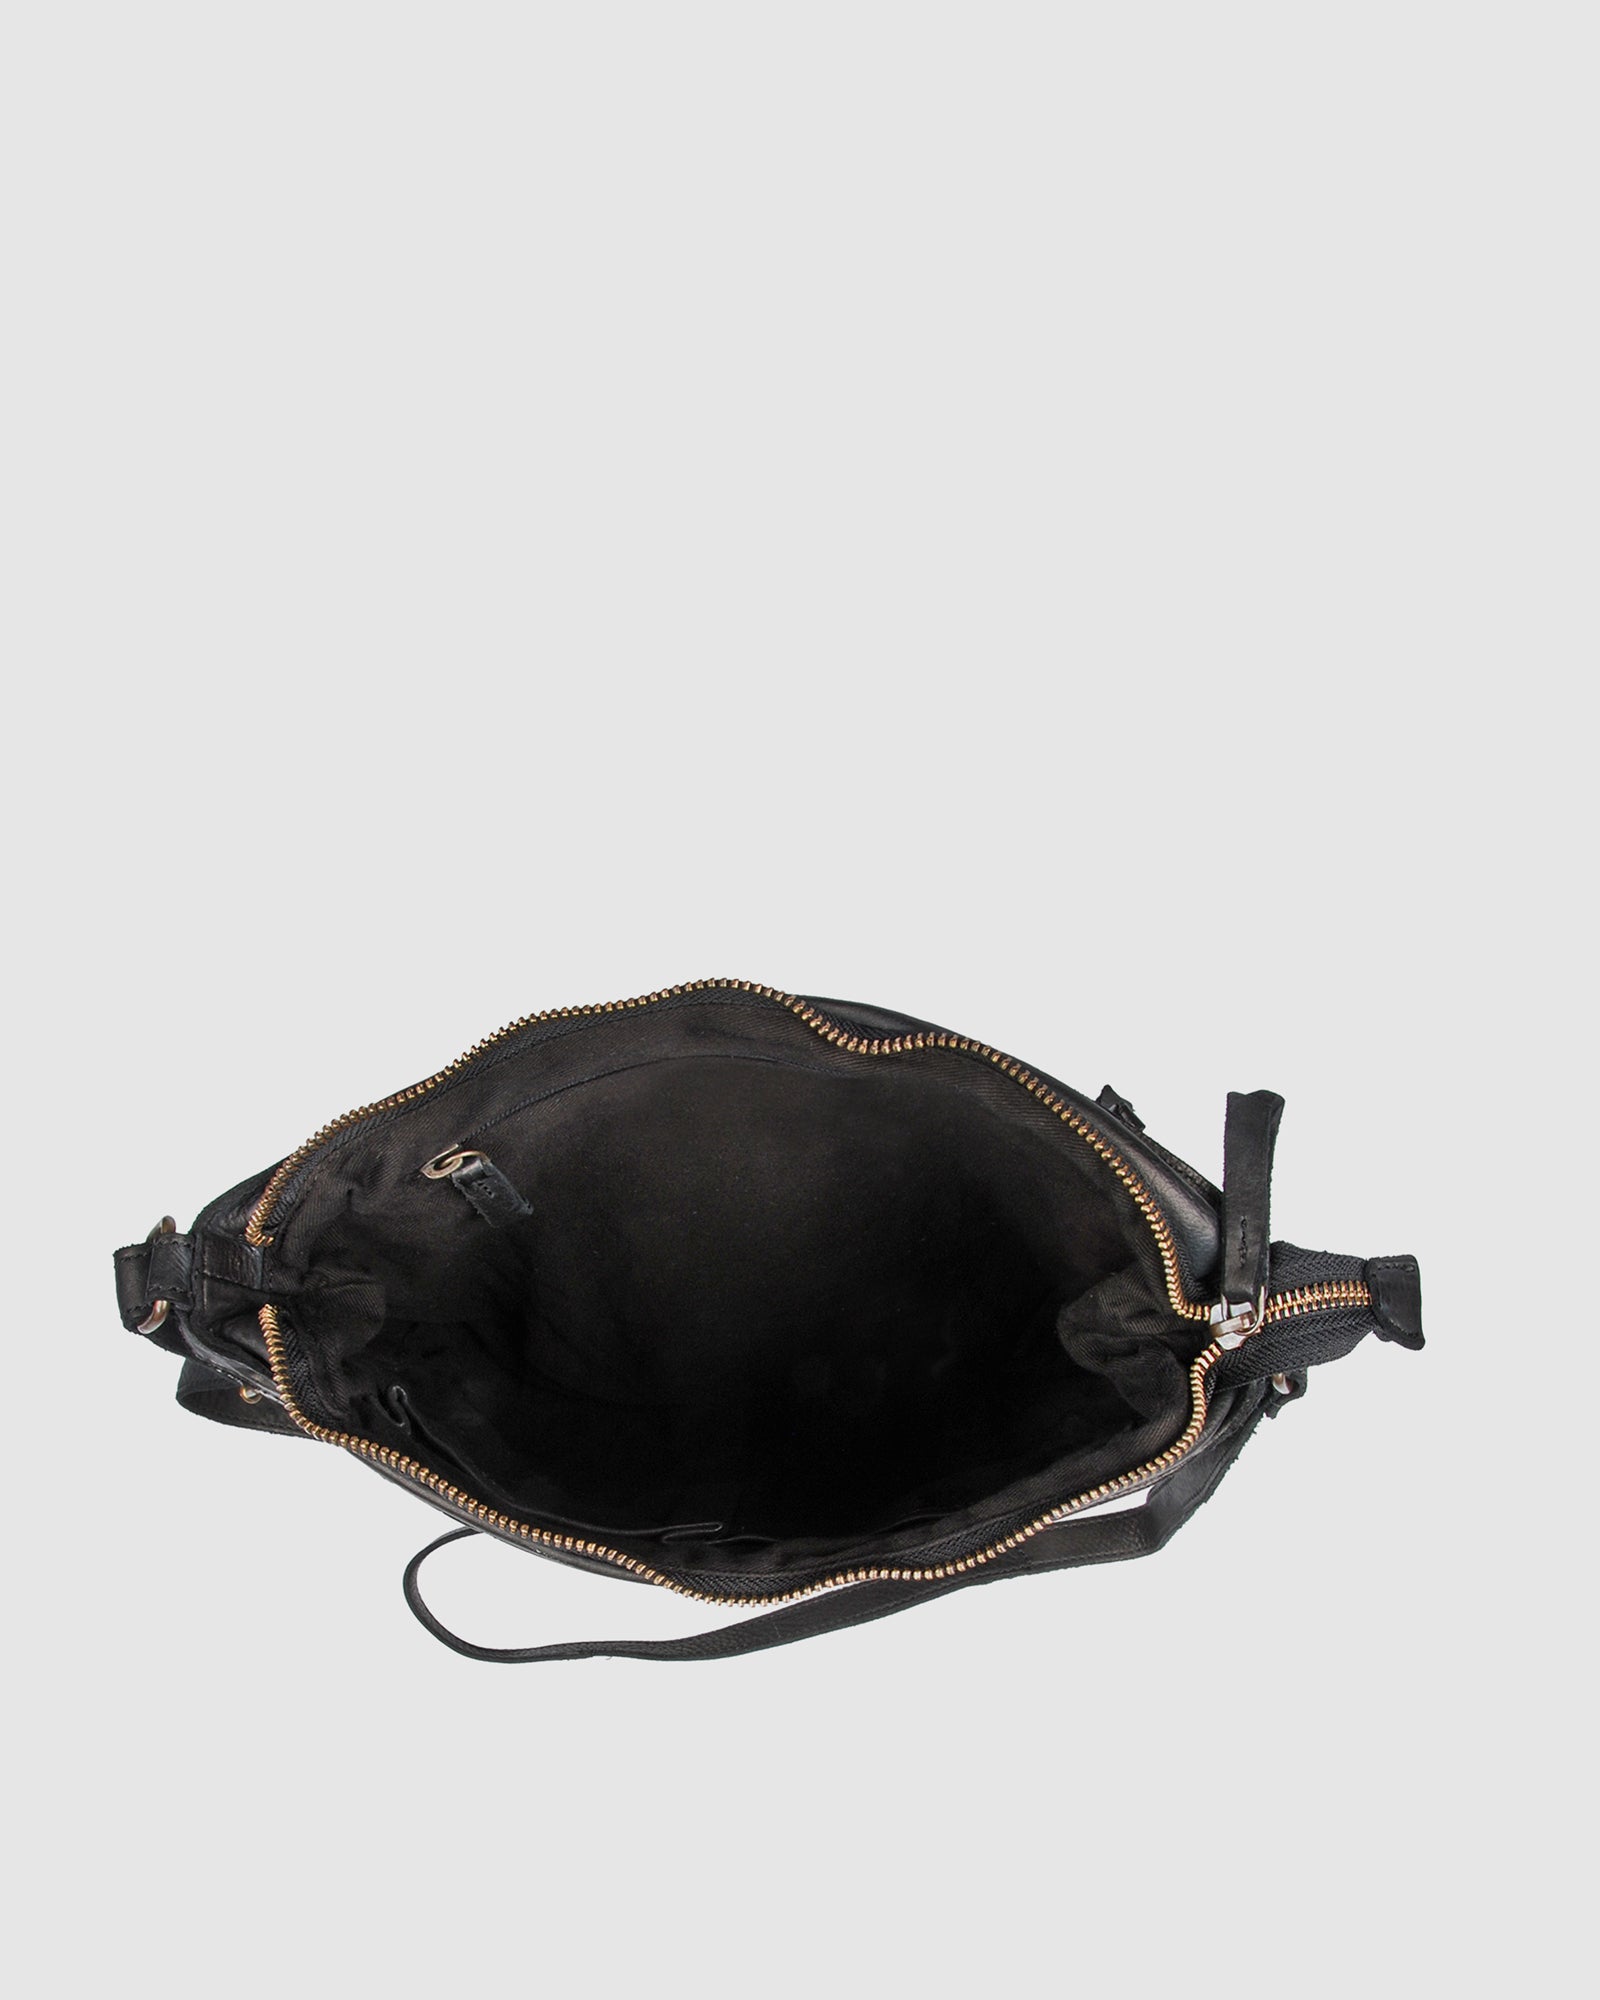 biba black crossbody bag